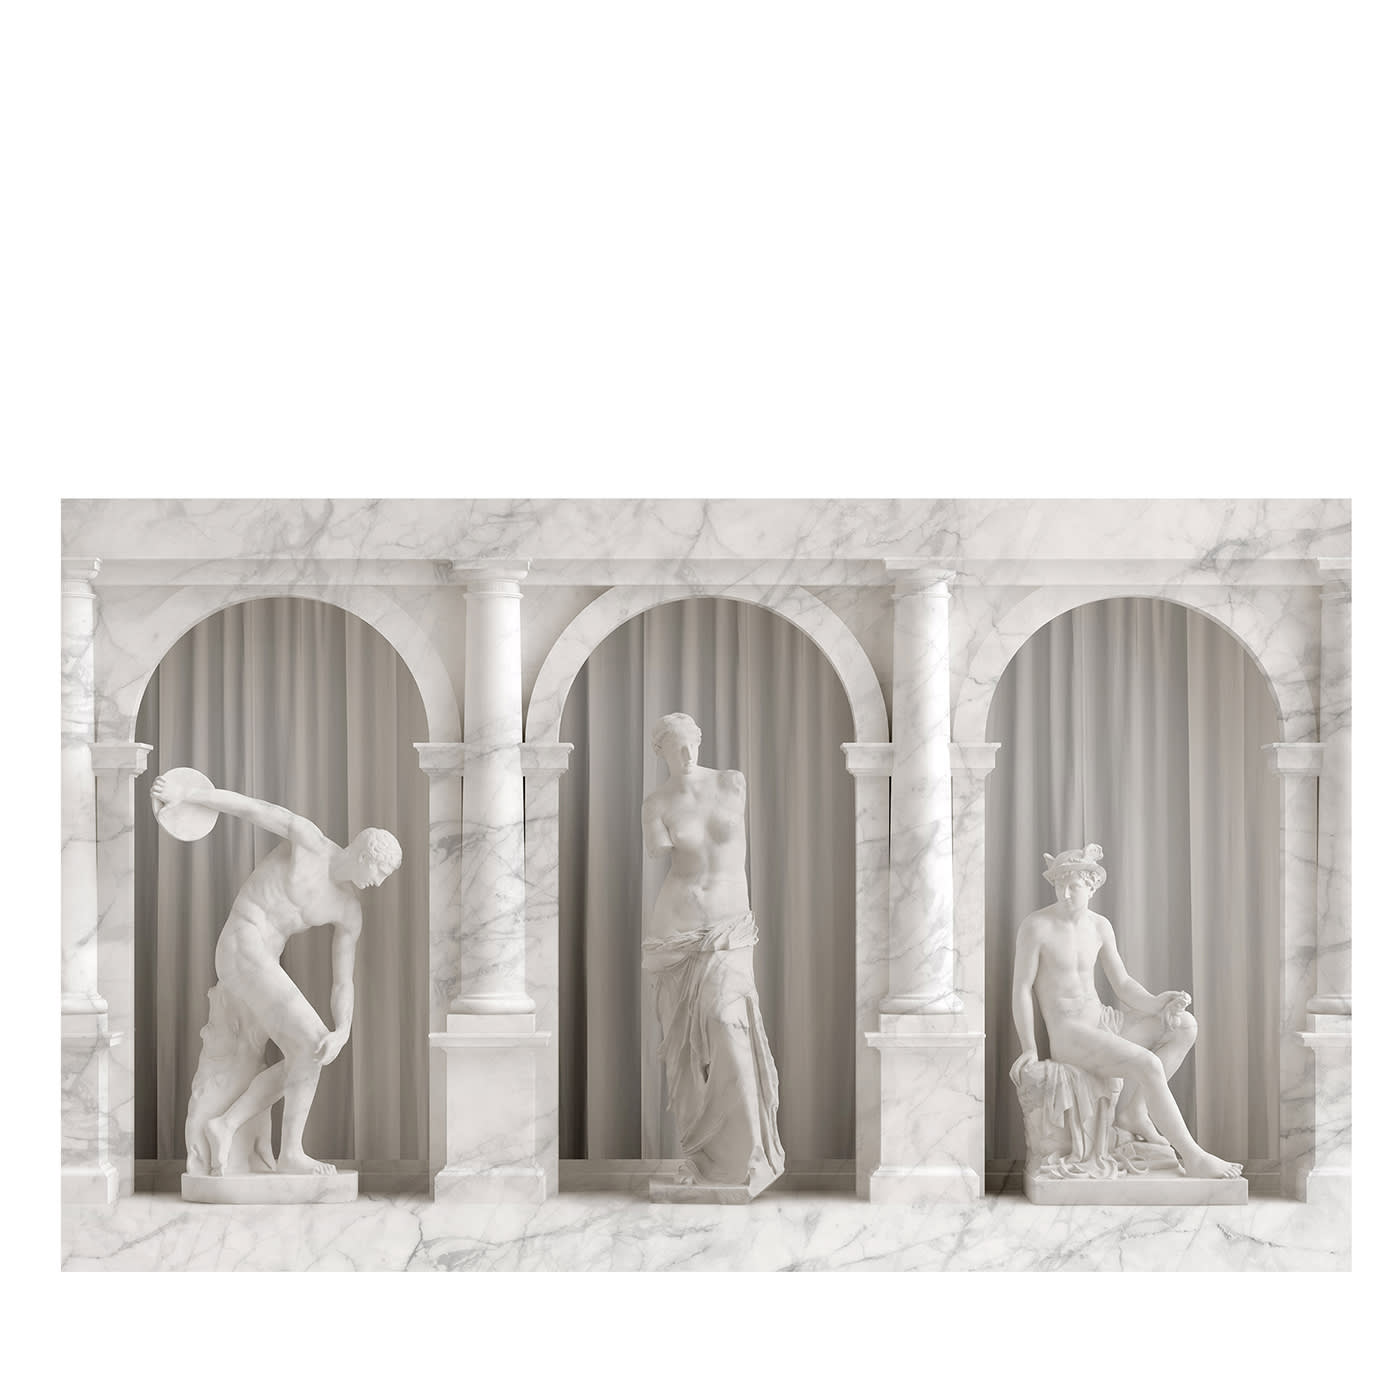 Carrara marble statues textured wallpaper - Affreschi & Affreschi